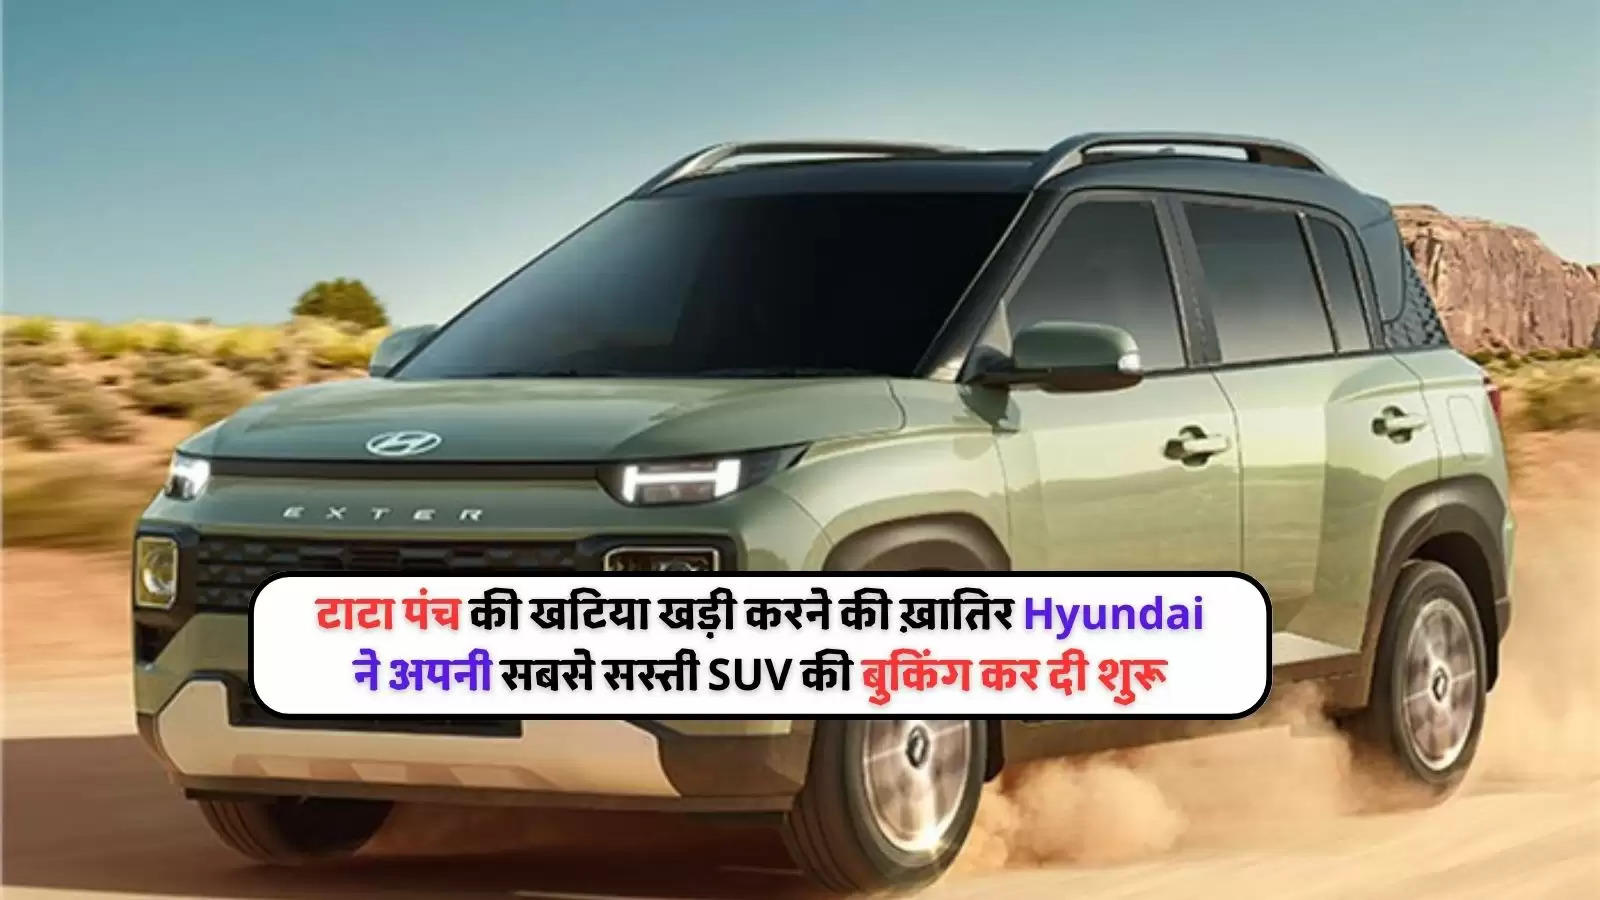 Hyundai Exter SUV Booking start